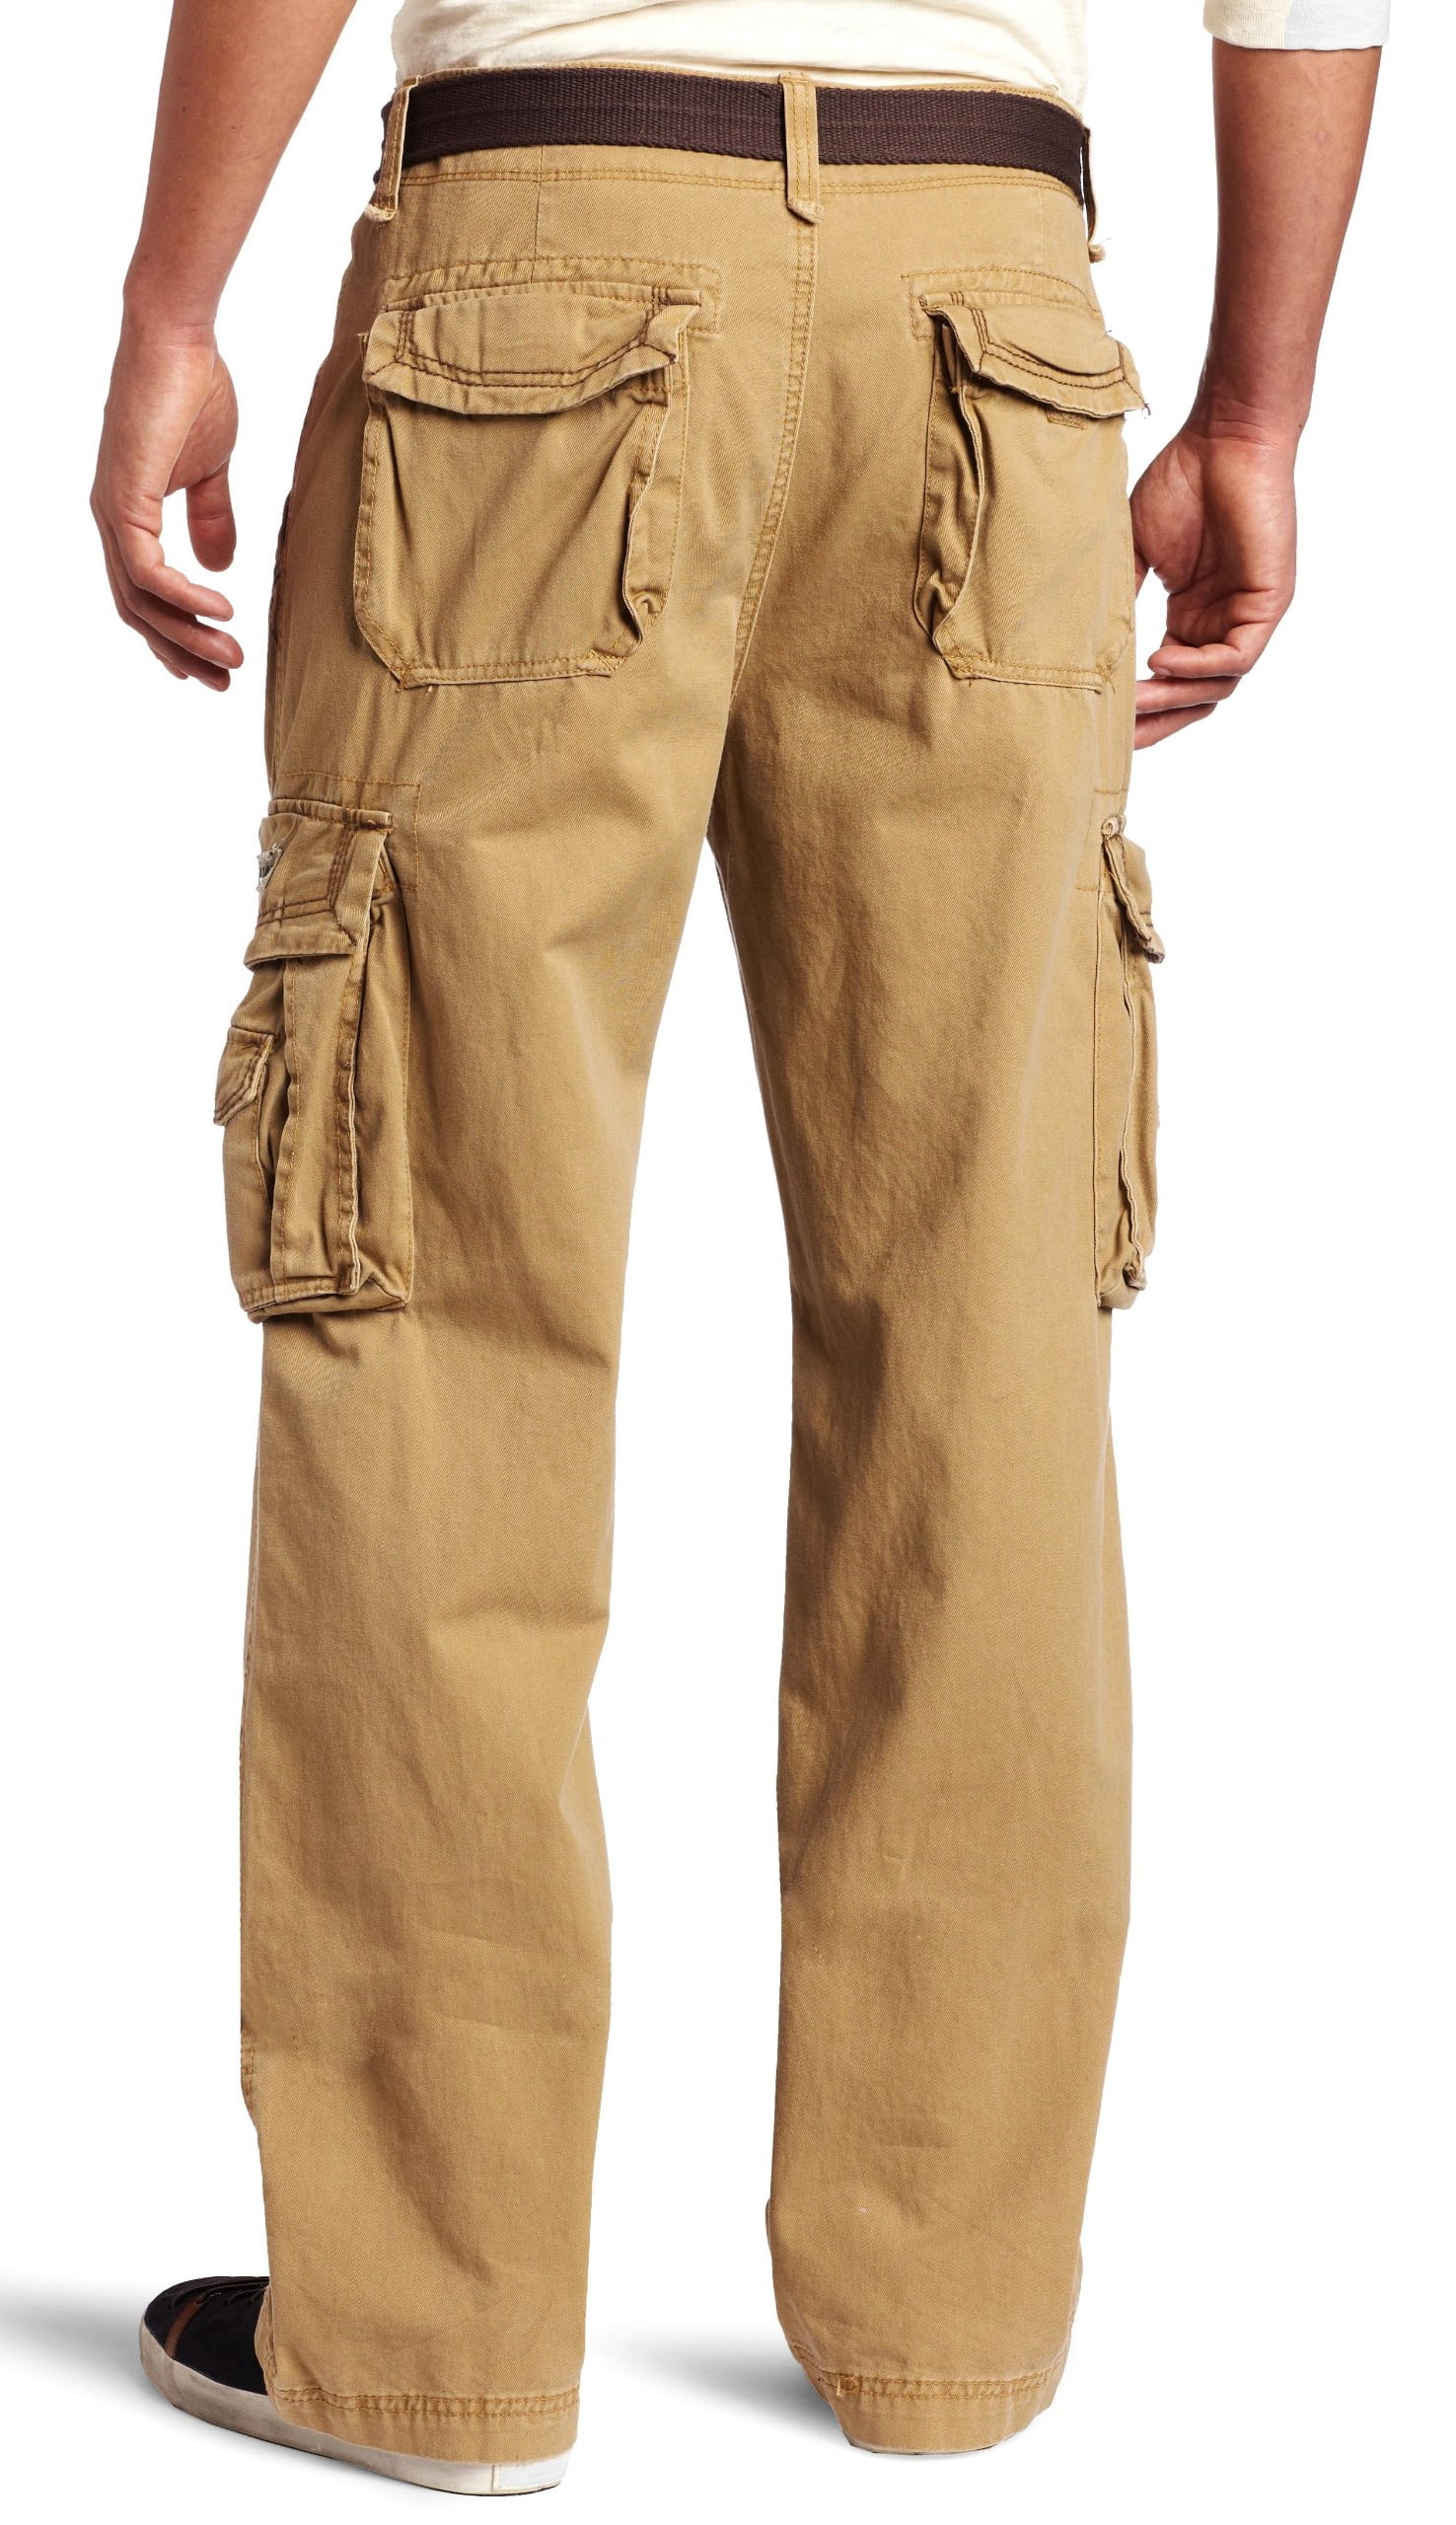 unionbay cargo pants junior from Searscom